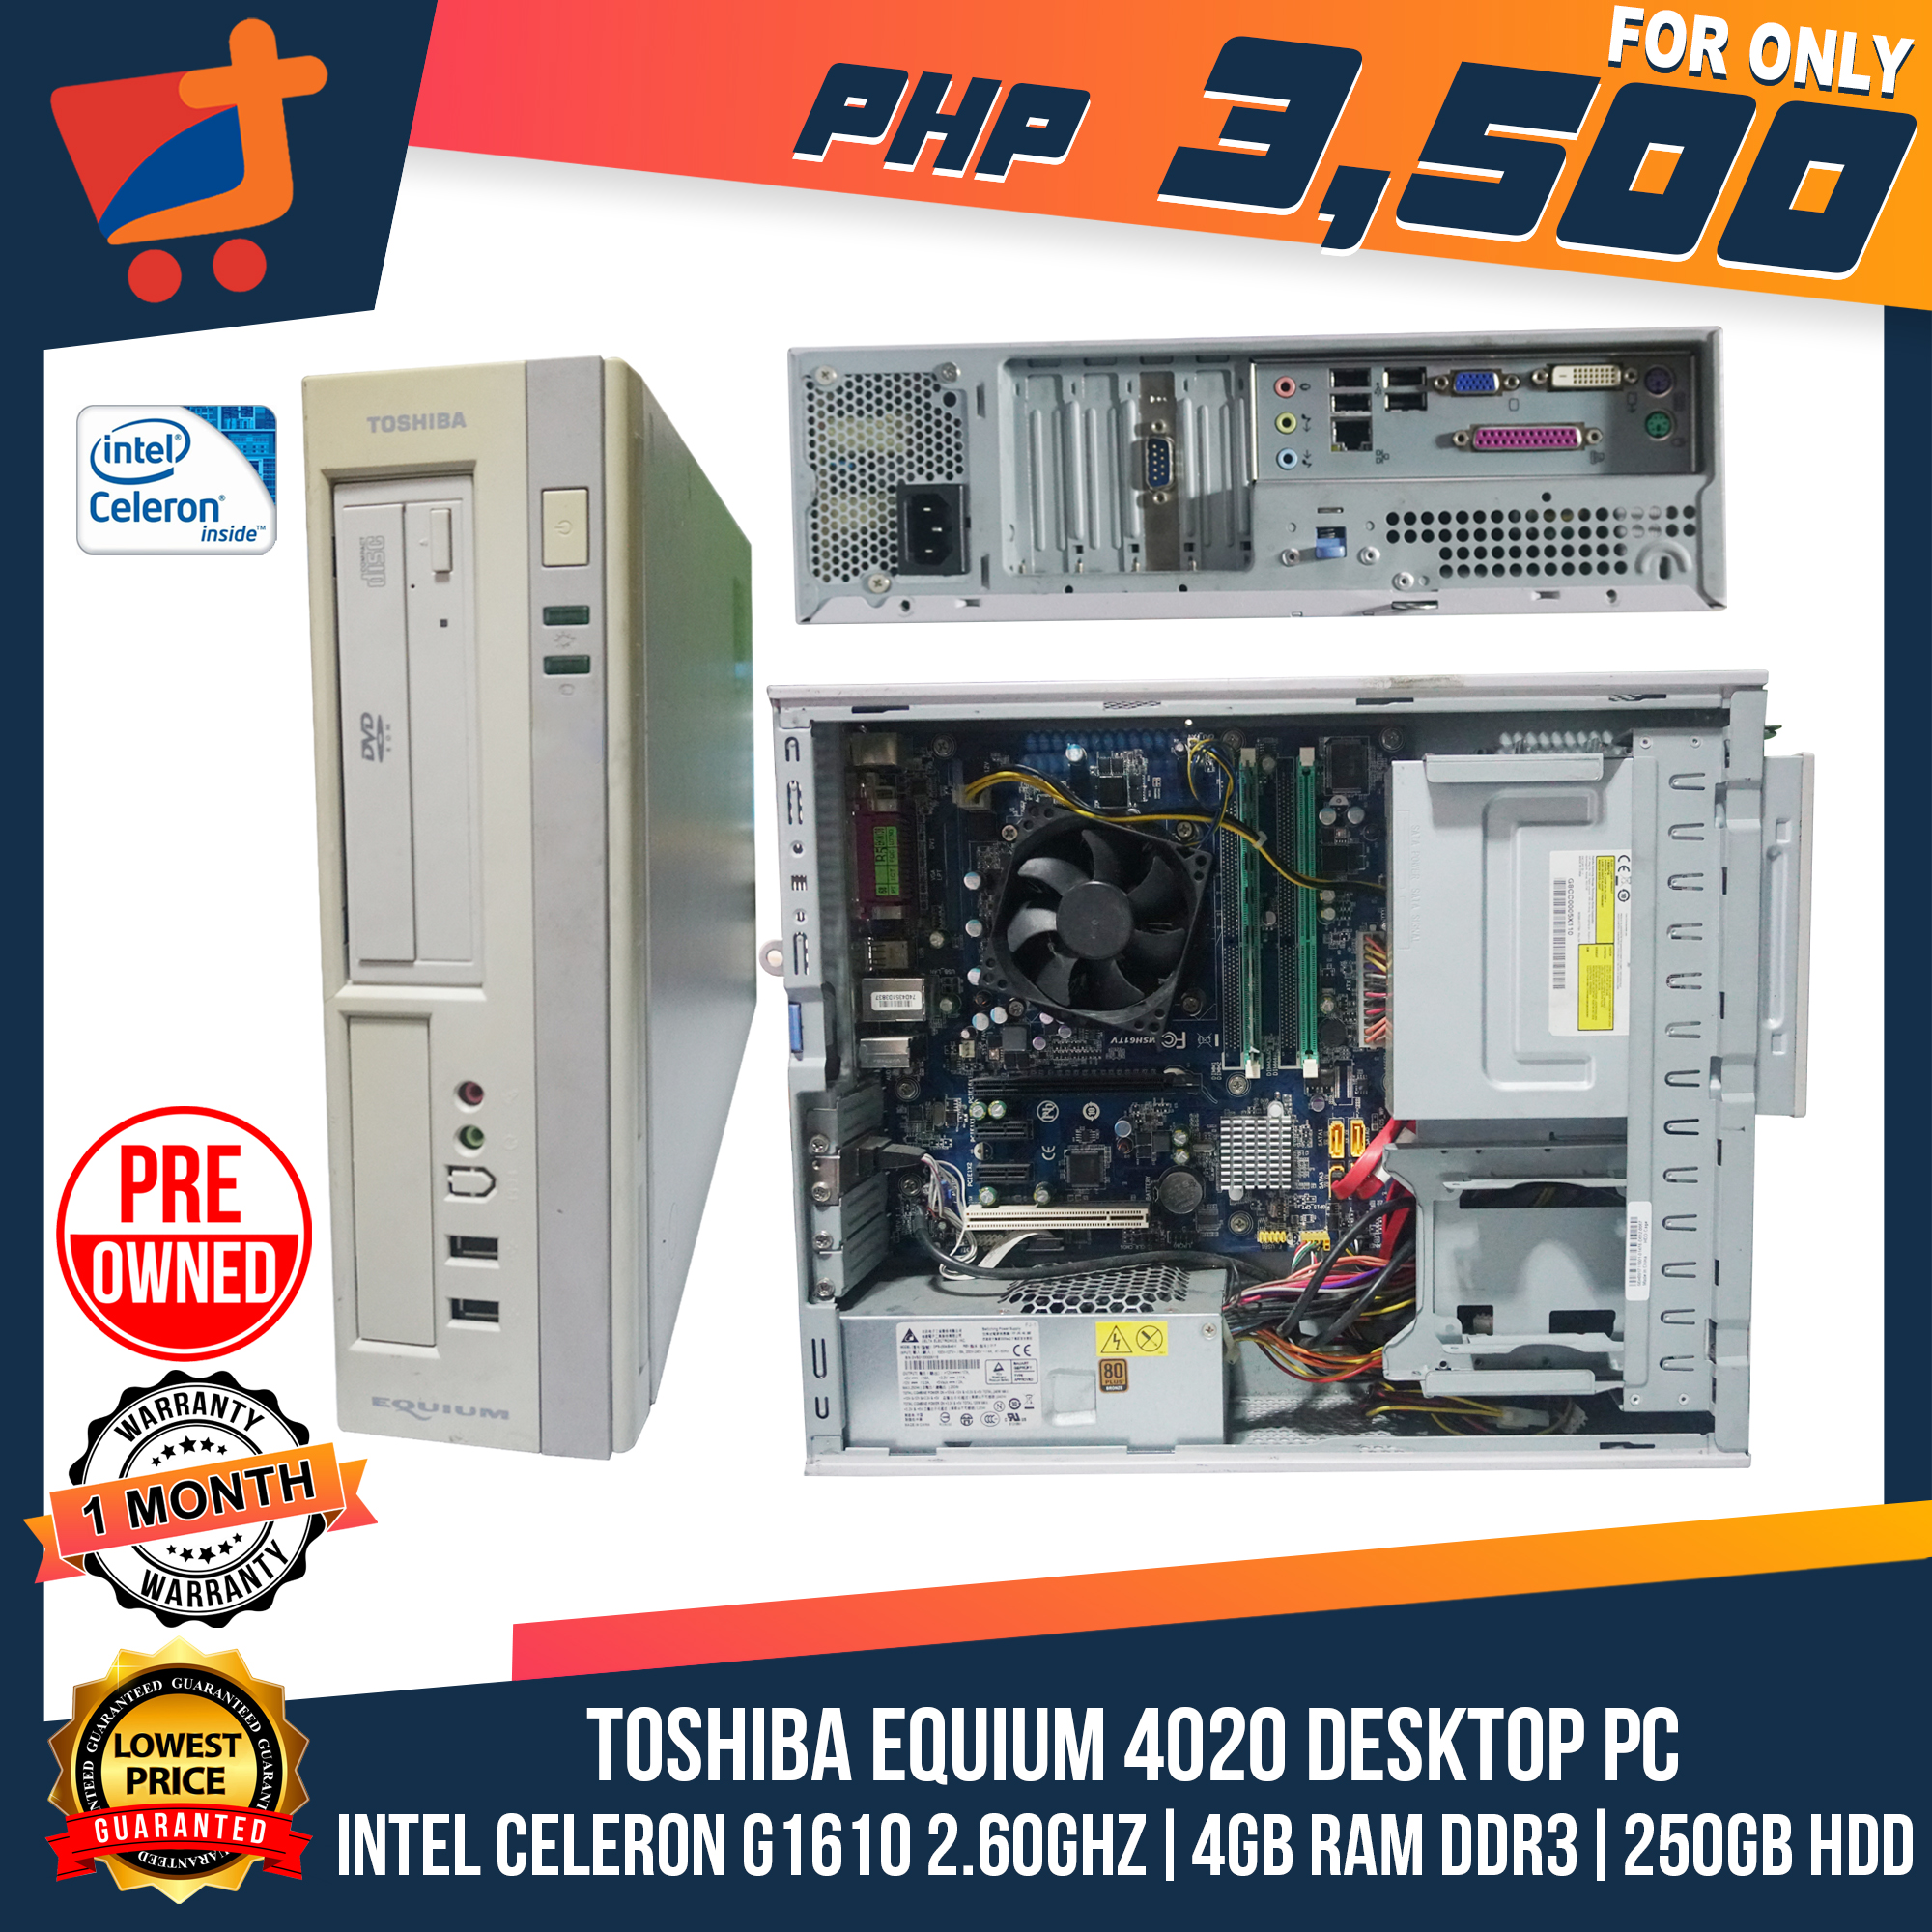 Toshiba Equium 4020 Desktop PC | Intel Celeron G1610 2.60Ghz, 4GB